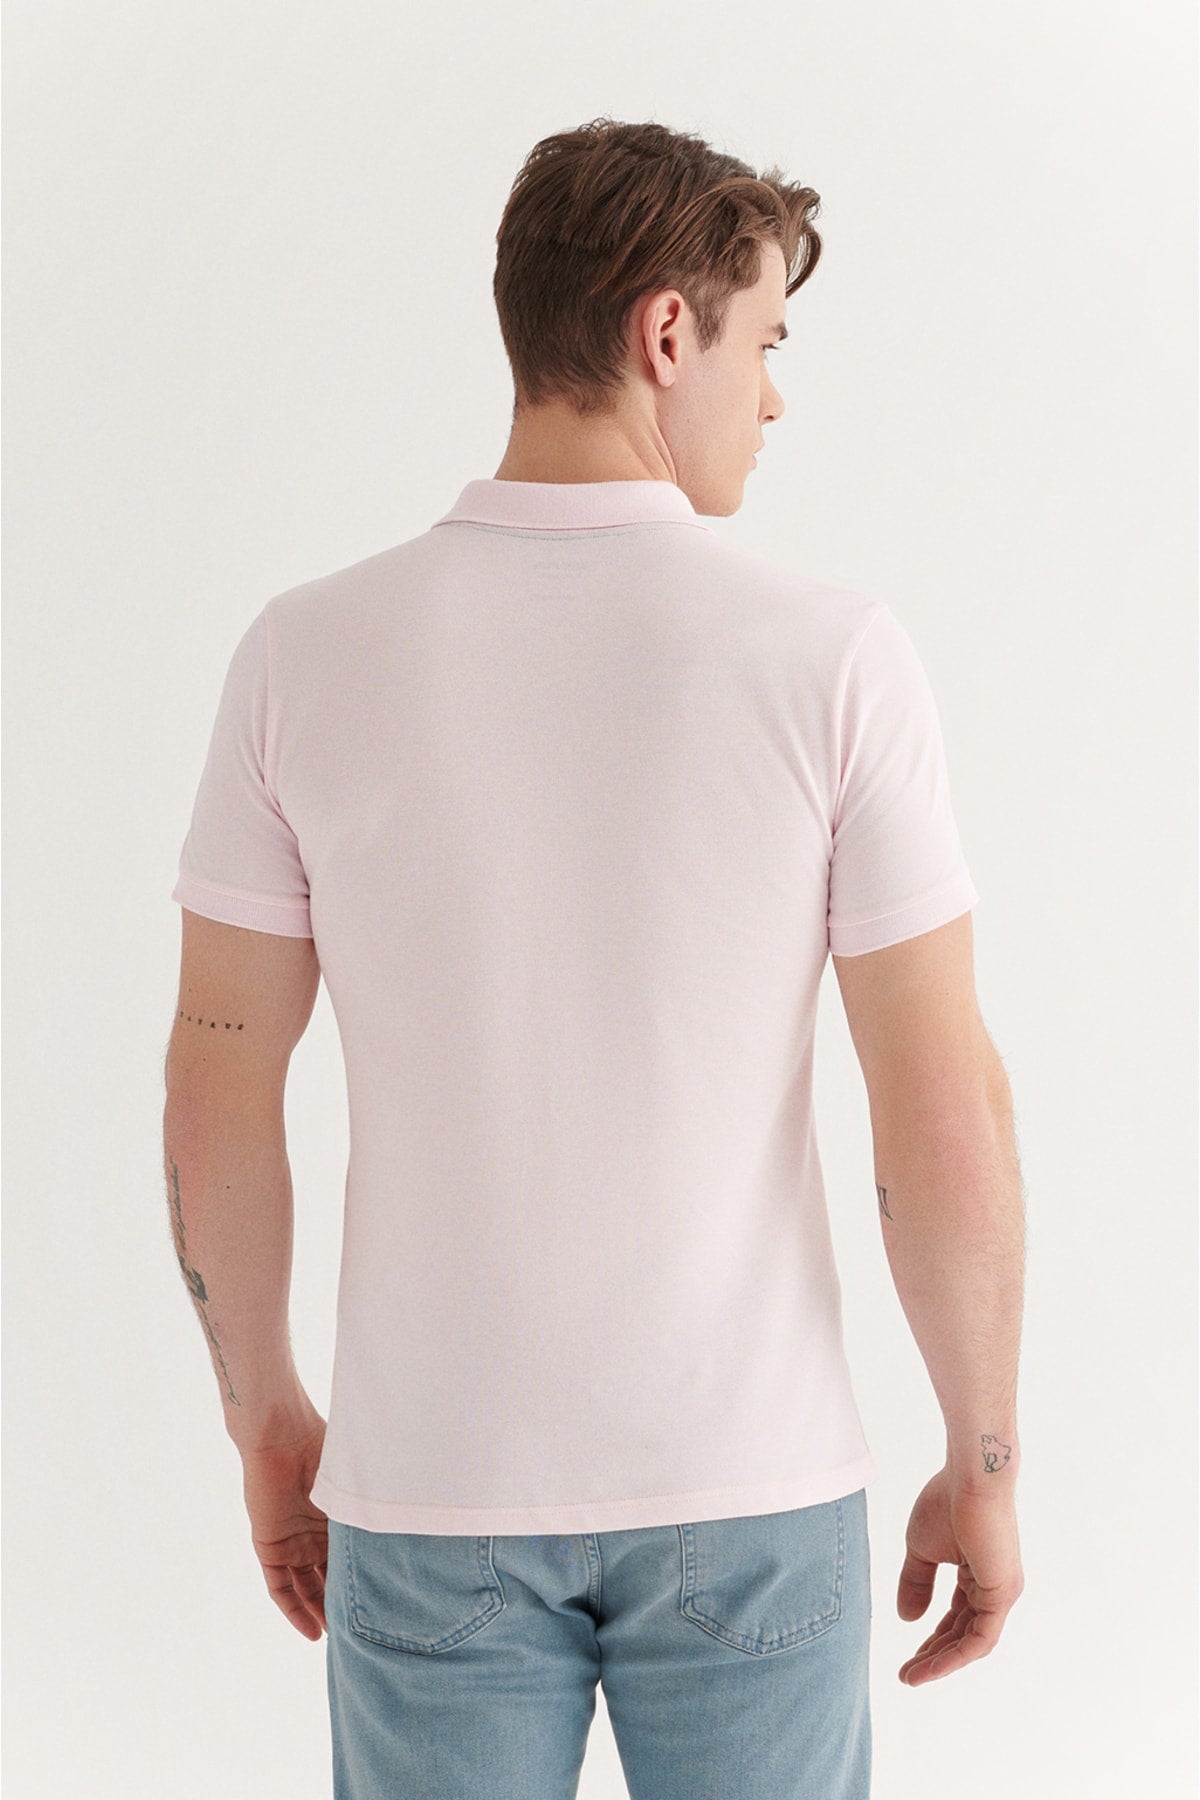 Men's Light Pink 100% Cotton Breathable Standard Fit Normal Cut Polo Neck T-shirt E001004